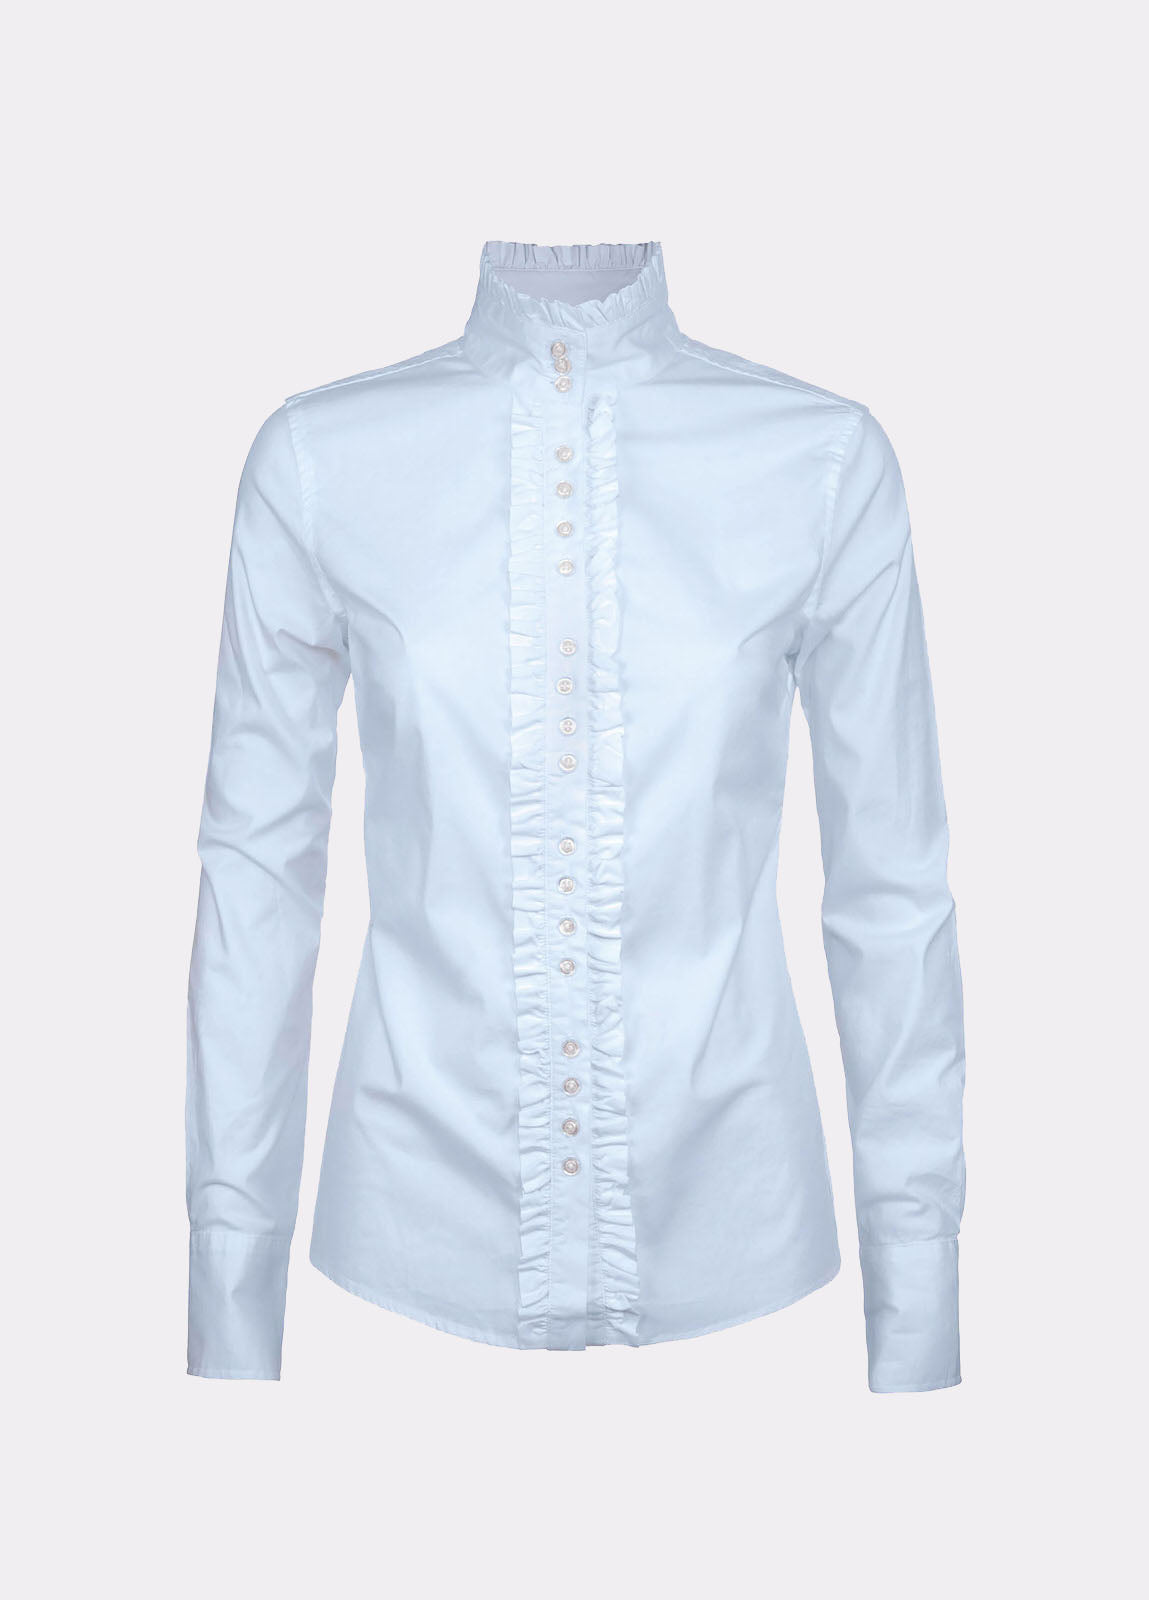 Chamomile Shirt - Pale Blue